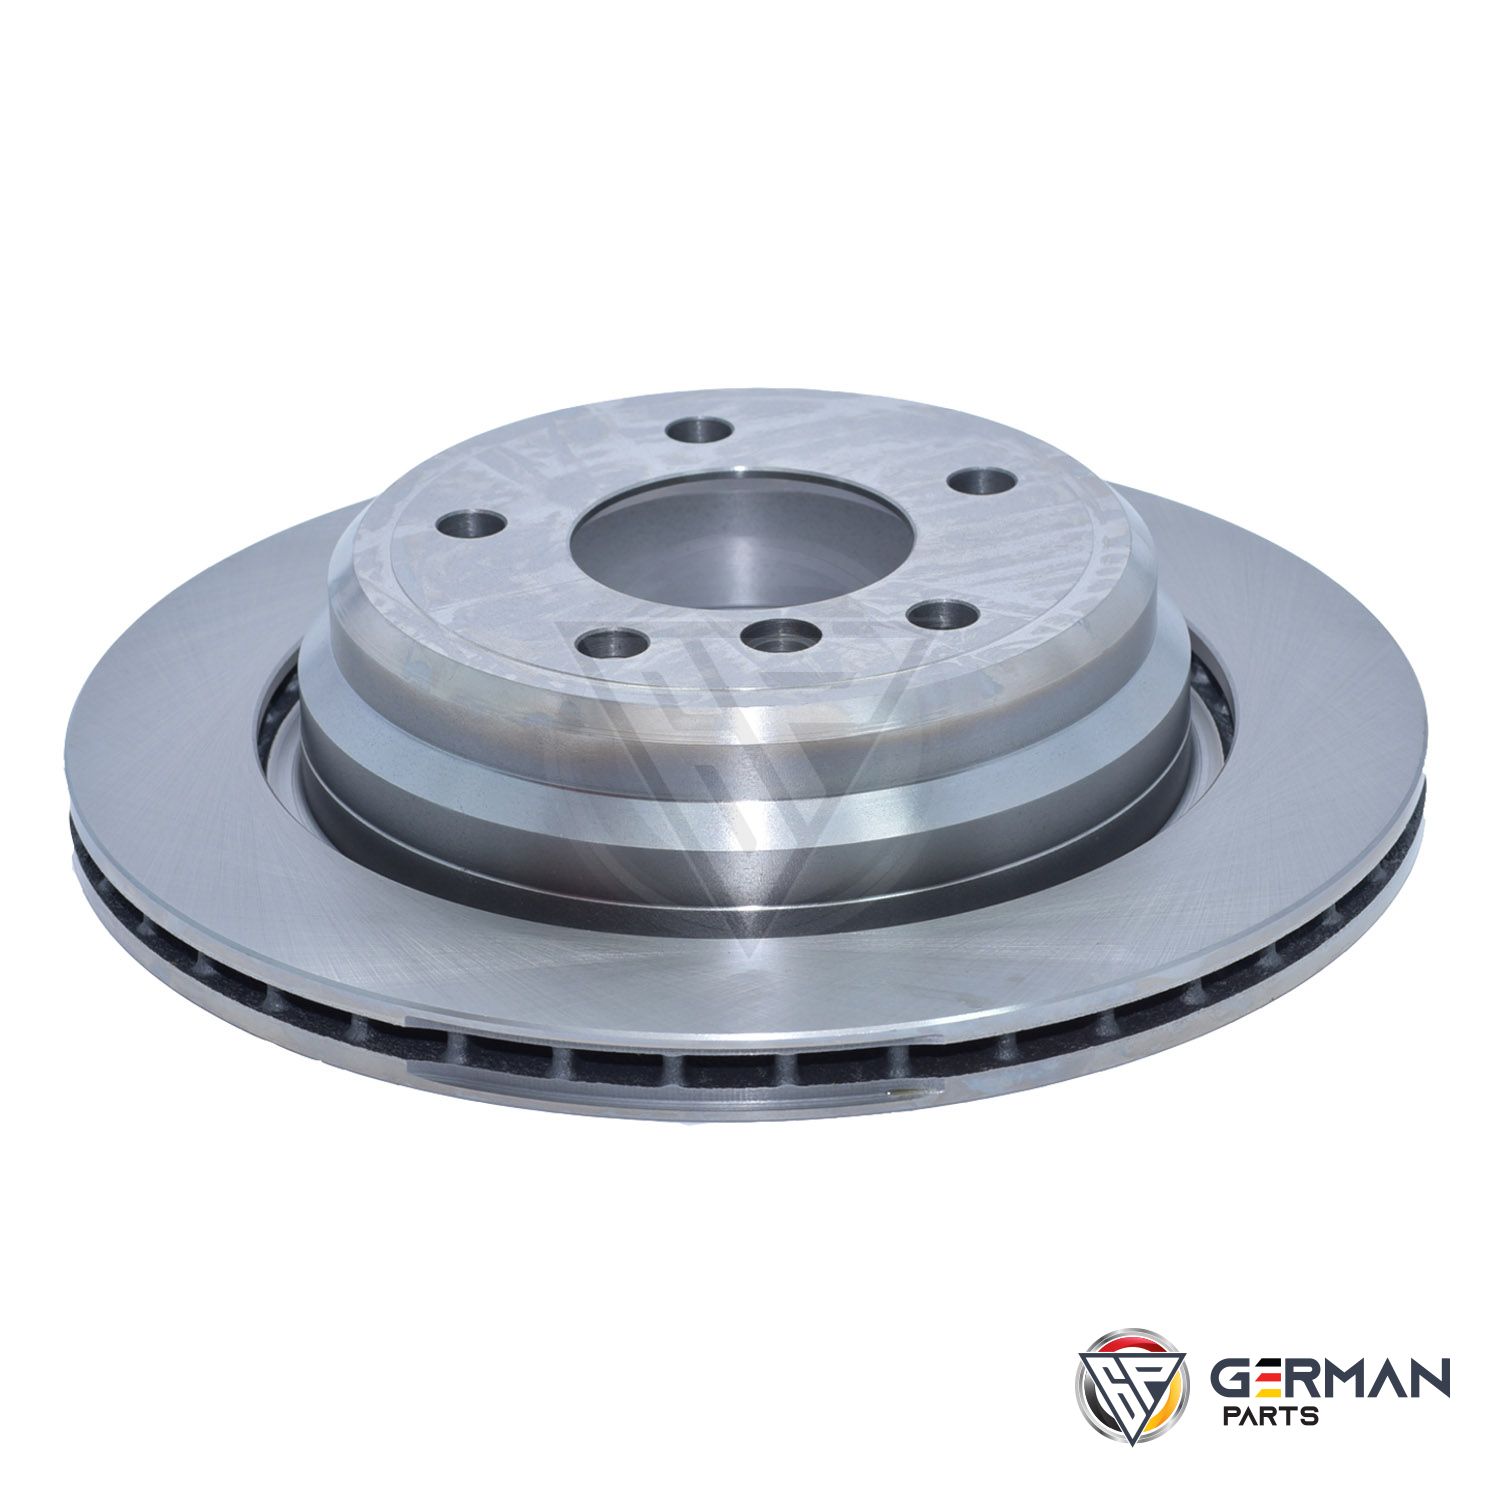 Buy TRW Rear Brake Disc 34216767060 - German Parts